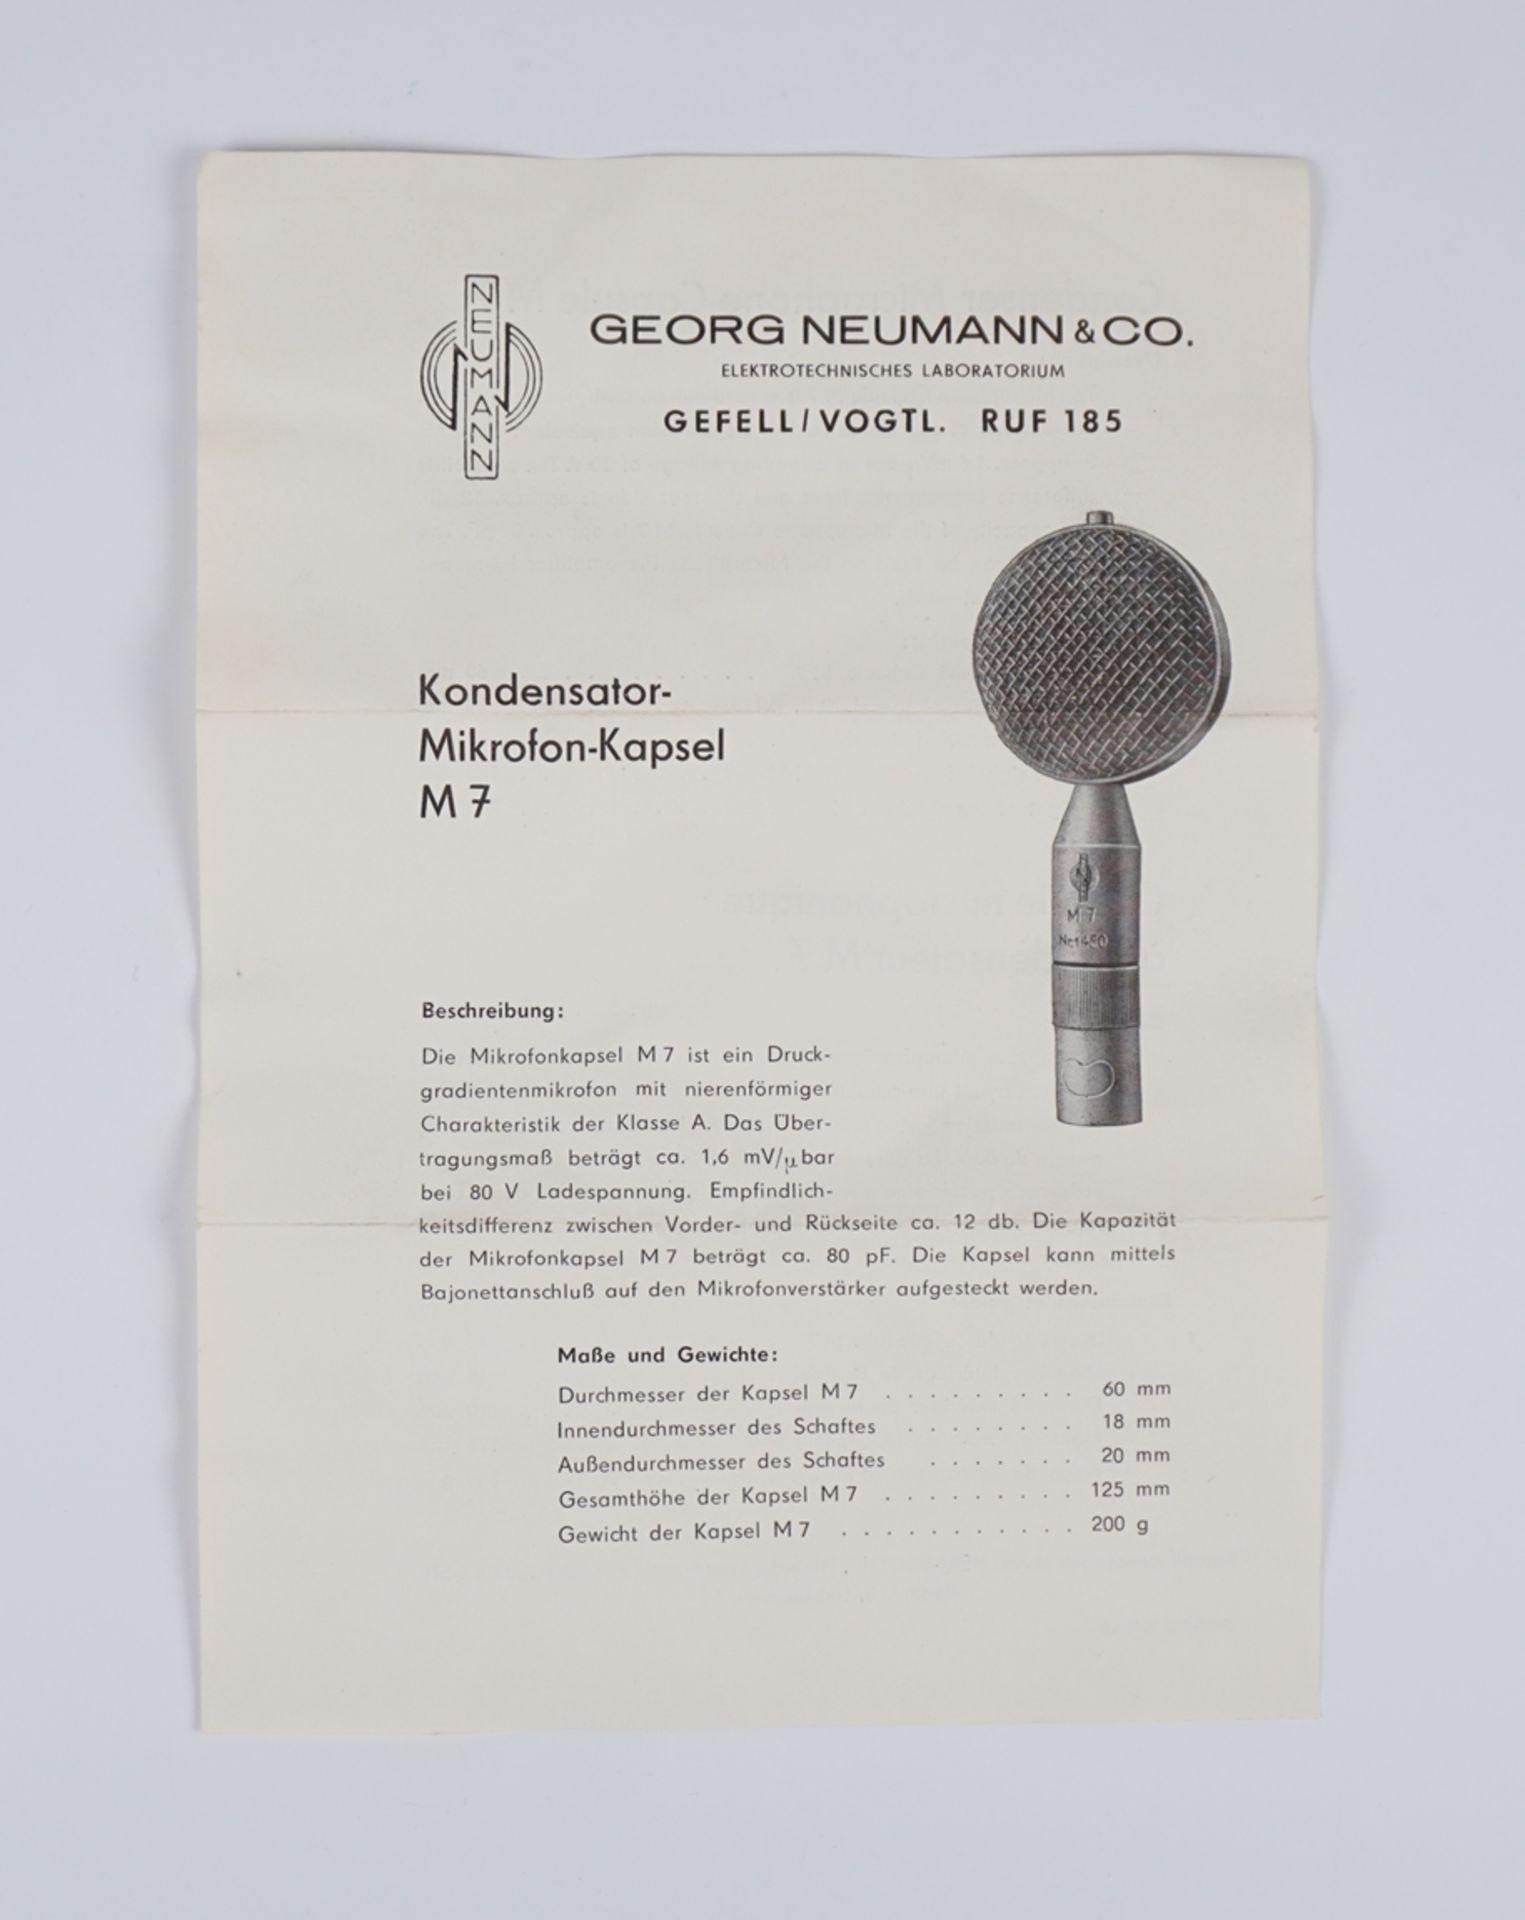 Kondensator-Mikrofonkapsel M 7, Georg Neumann&Co, Gefell/Vogland - Image 4 of 5